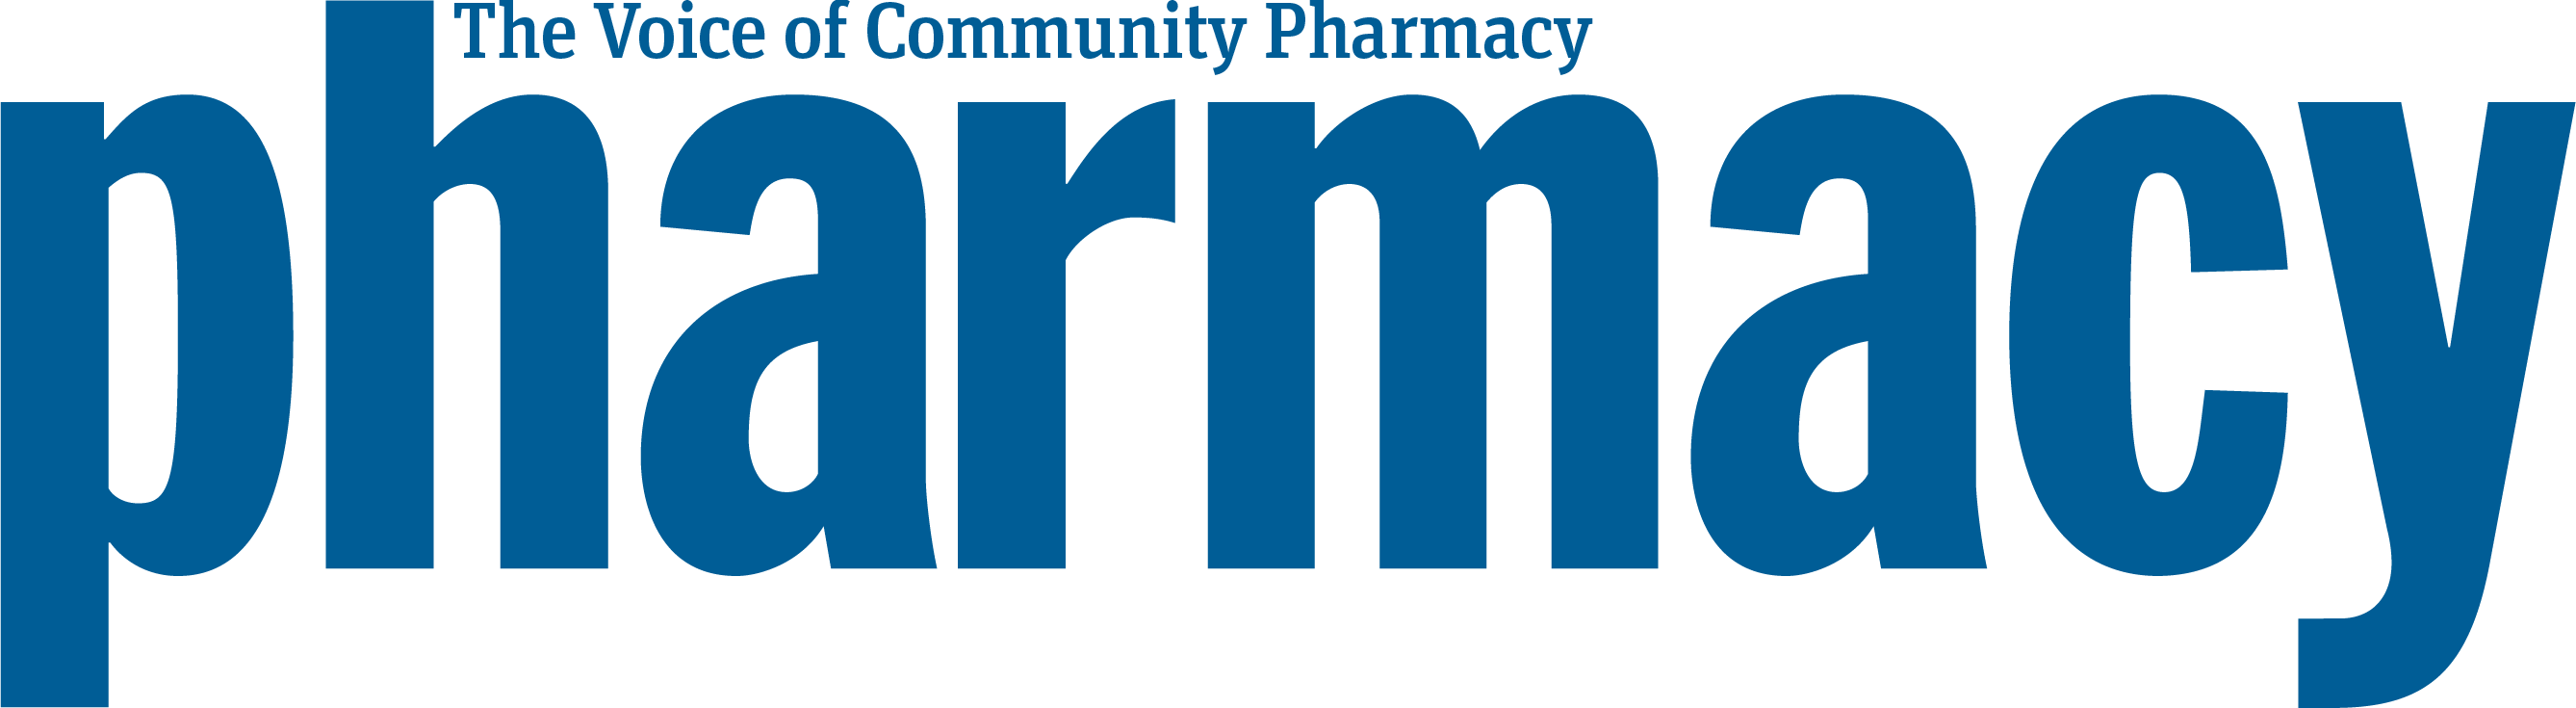 Pharmacy magazine logo footer